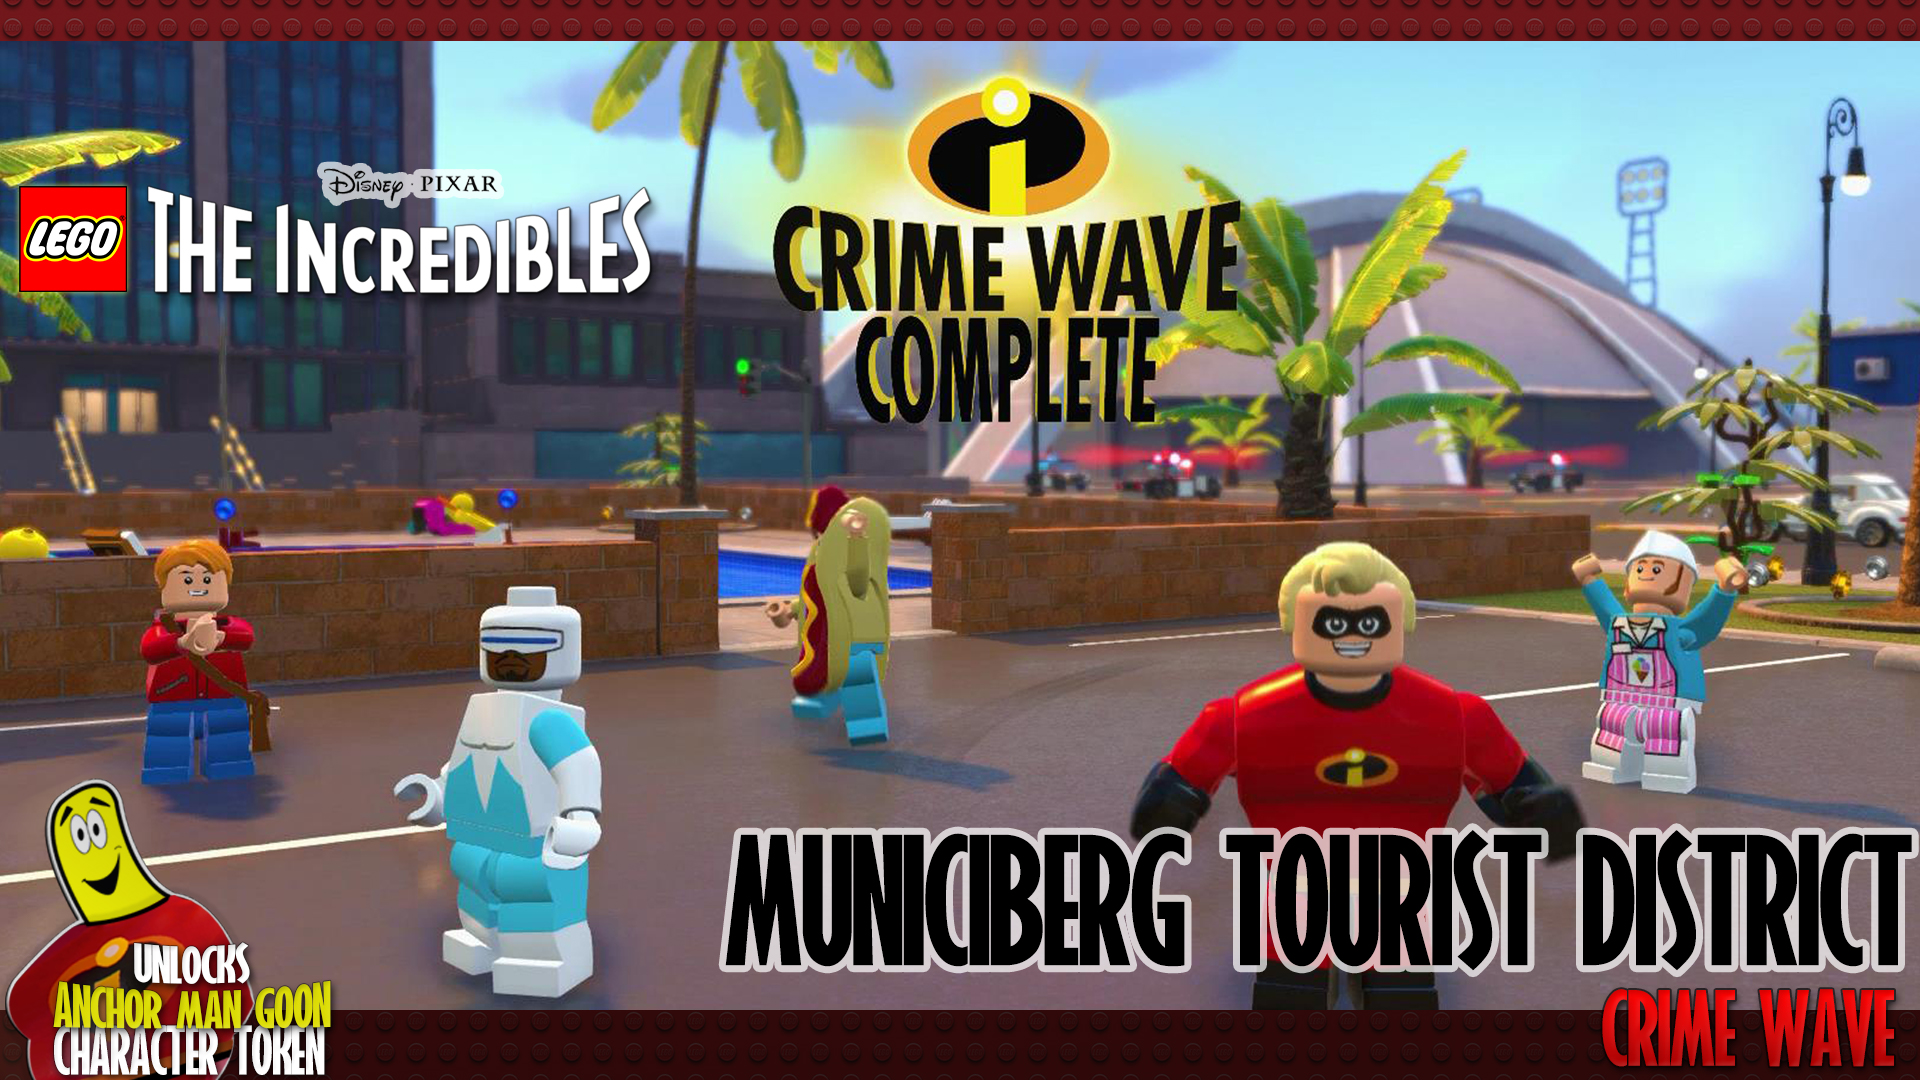 Lego The Incredibles: Municiberg / Tourist District CRIME WAVE – HTG